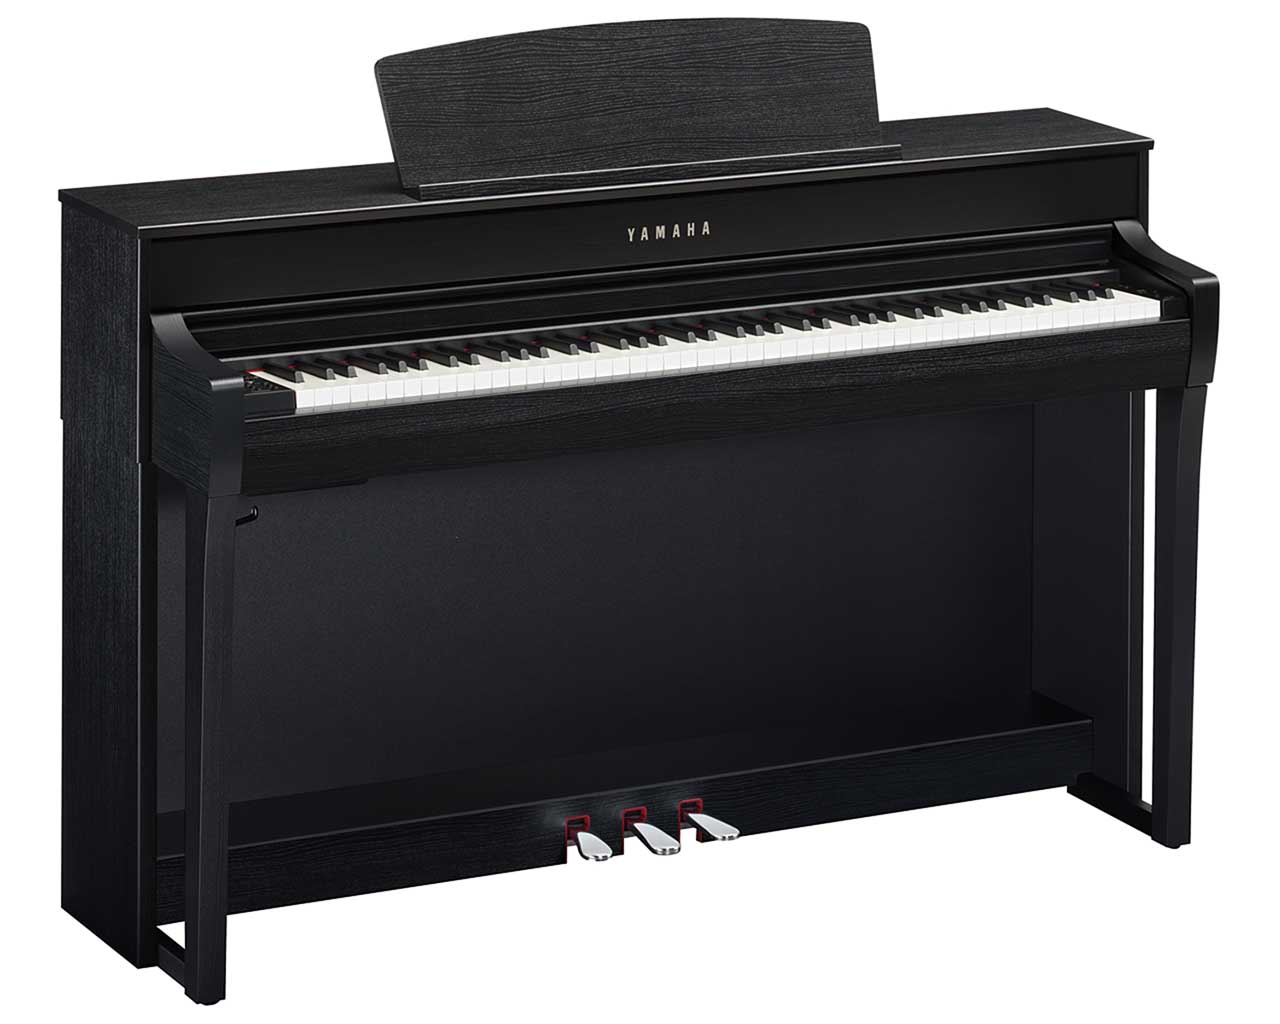 Yamaha Clavinova CLP 745 B Digitalpiano schwarz Pianohaus Filipski